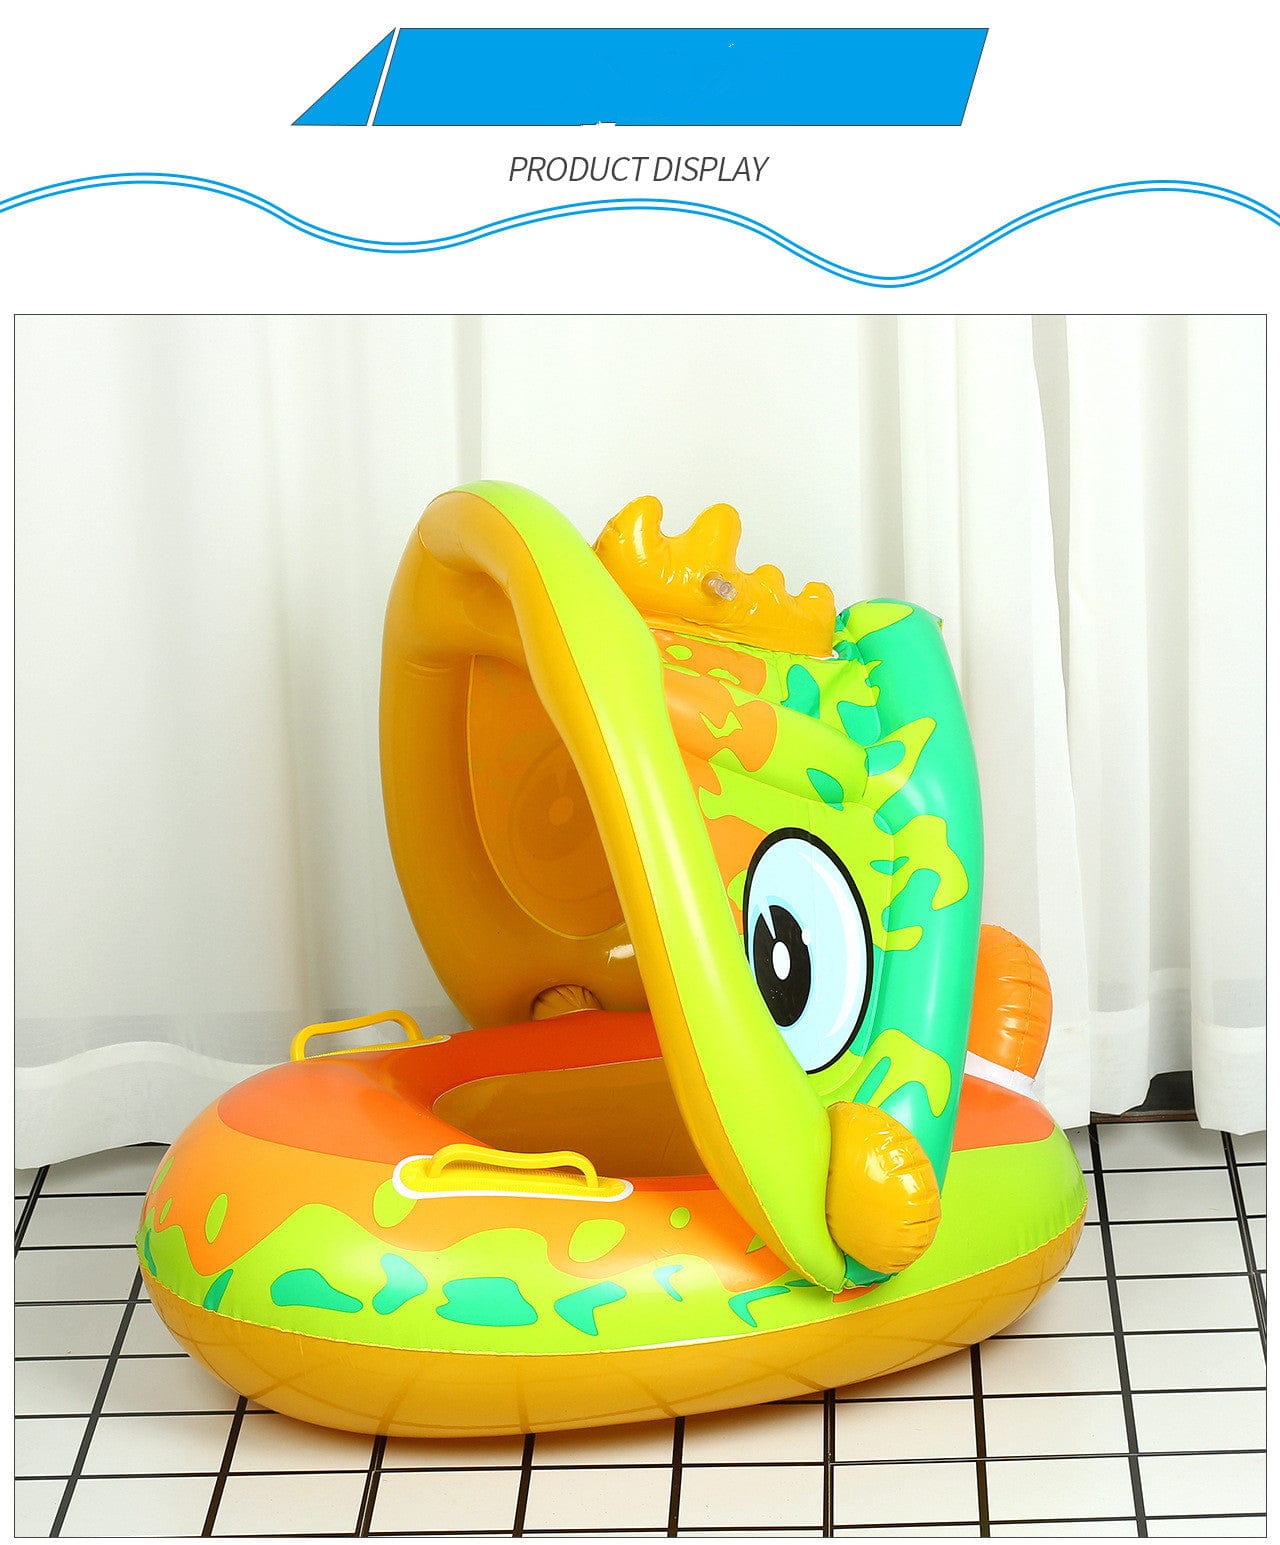 Proactive Baby LaLa Baby Kids Swimming Pool Inflatable Swim Float